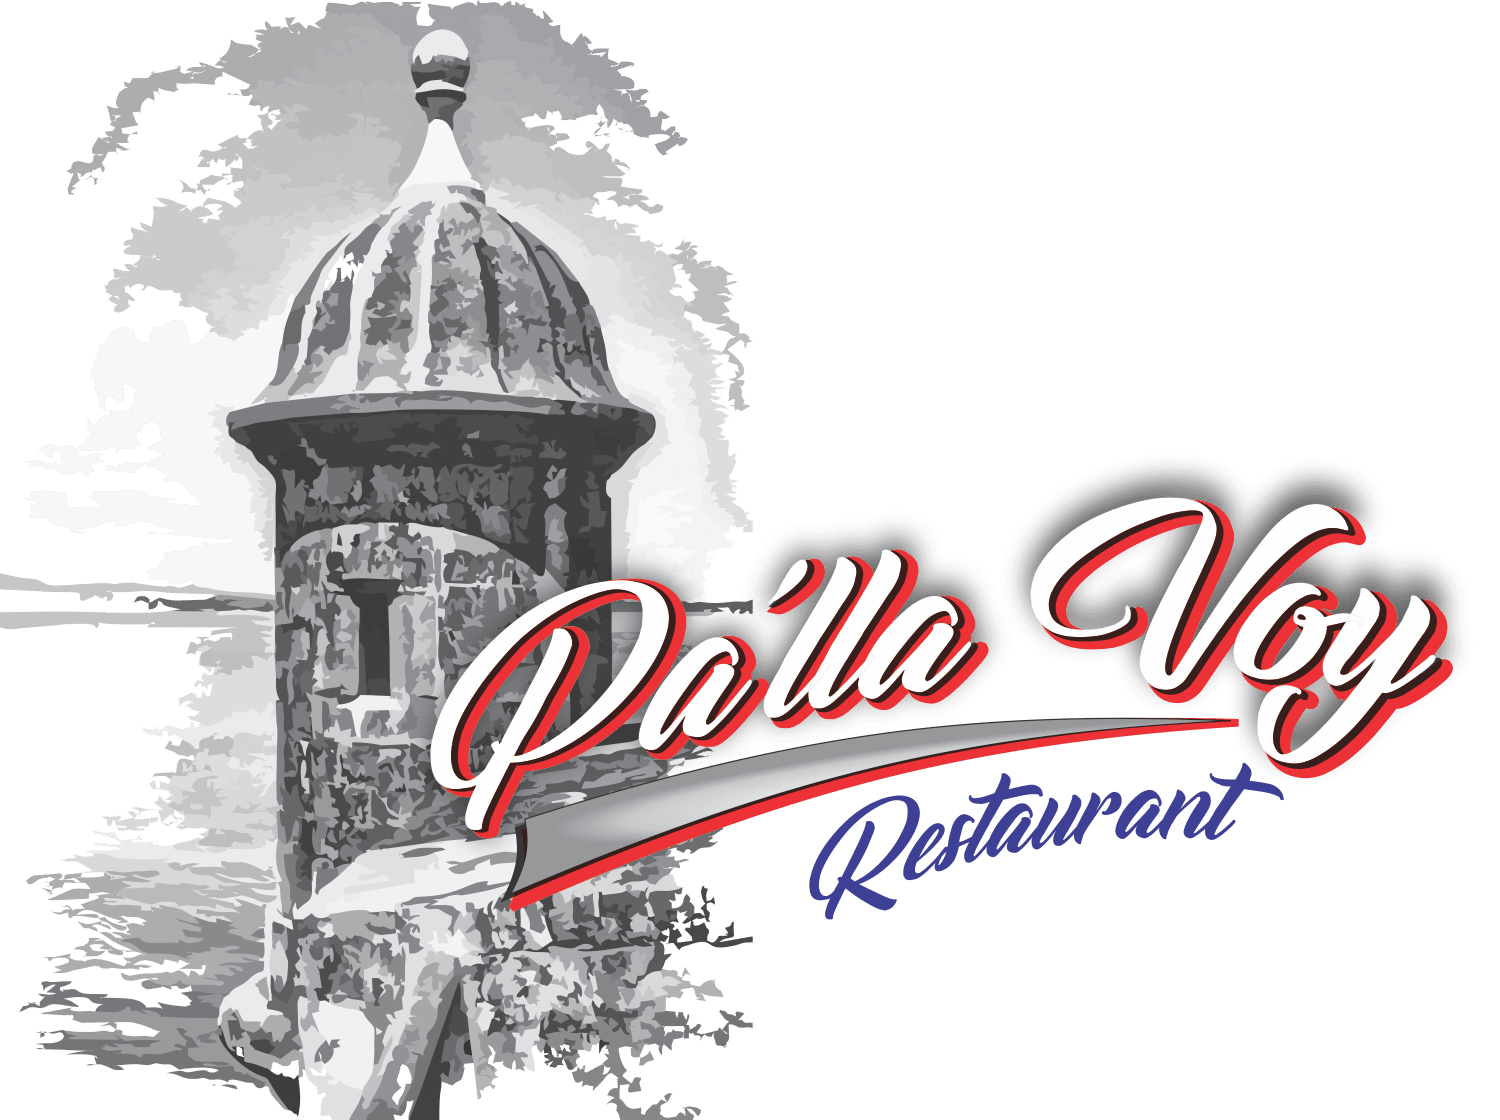 Pa'lla Voy Restaurant / Opening Soon in Sanford, FL